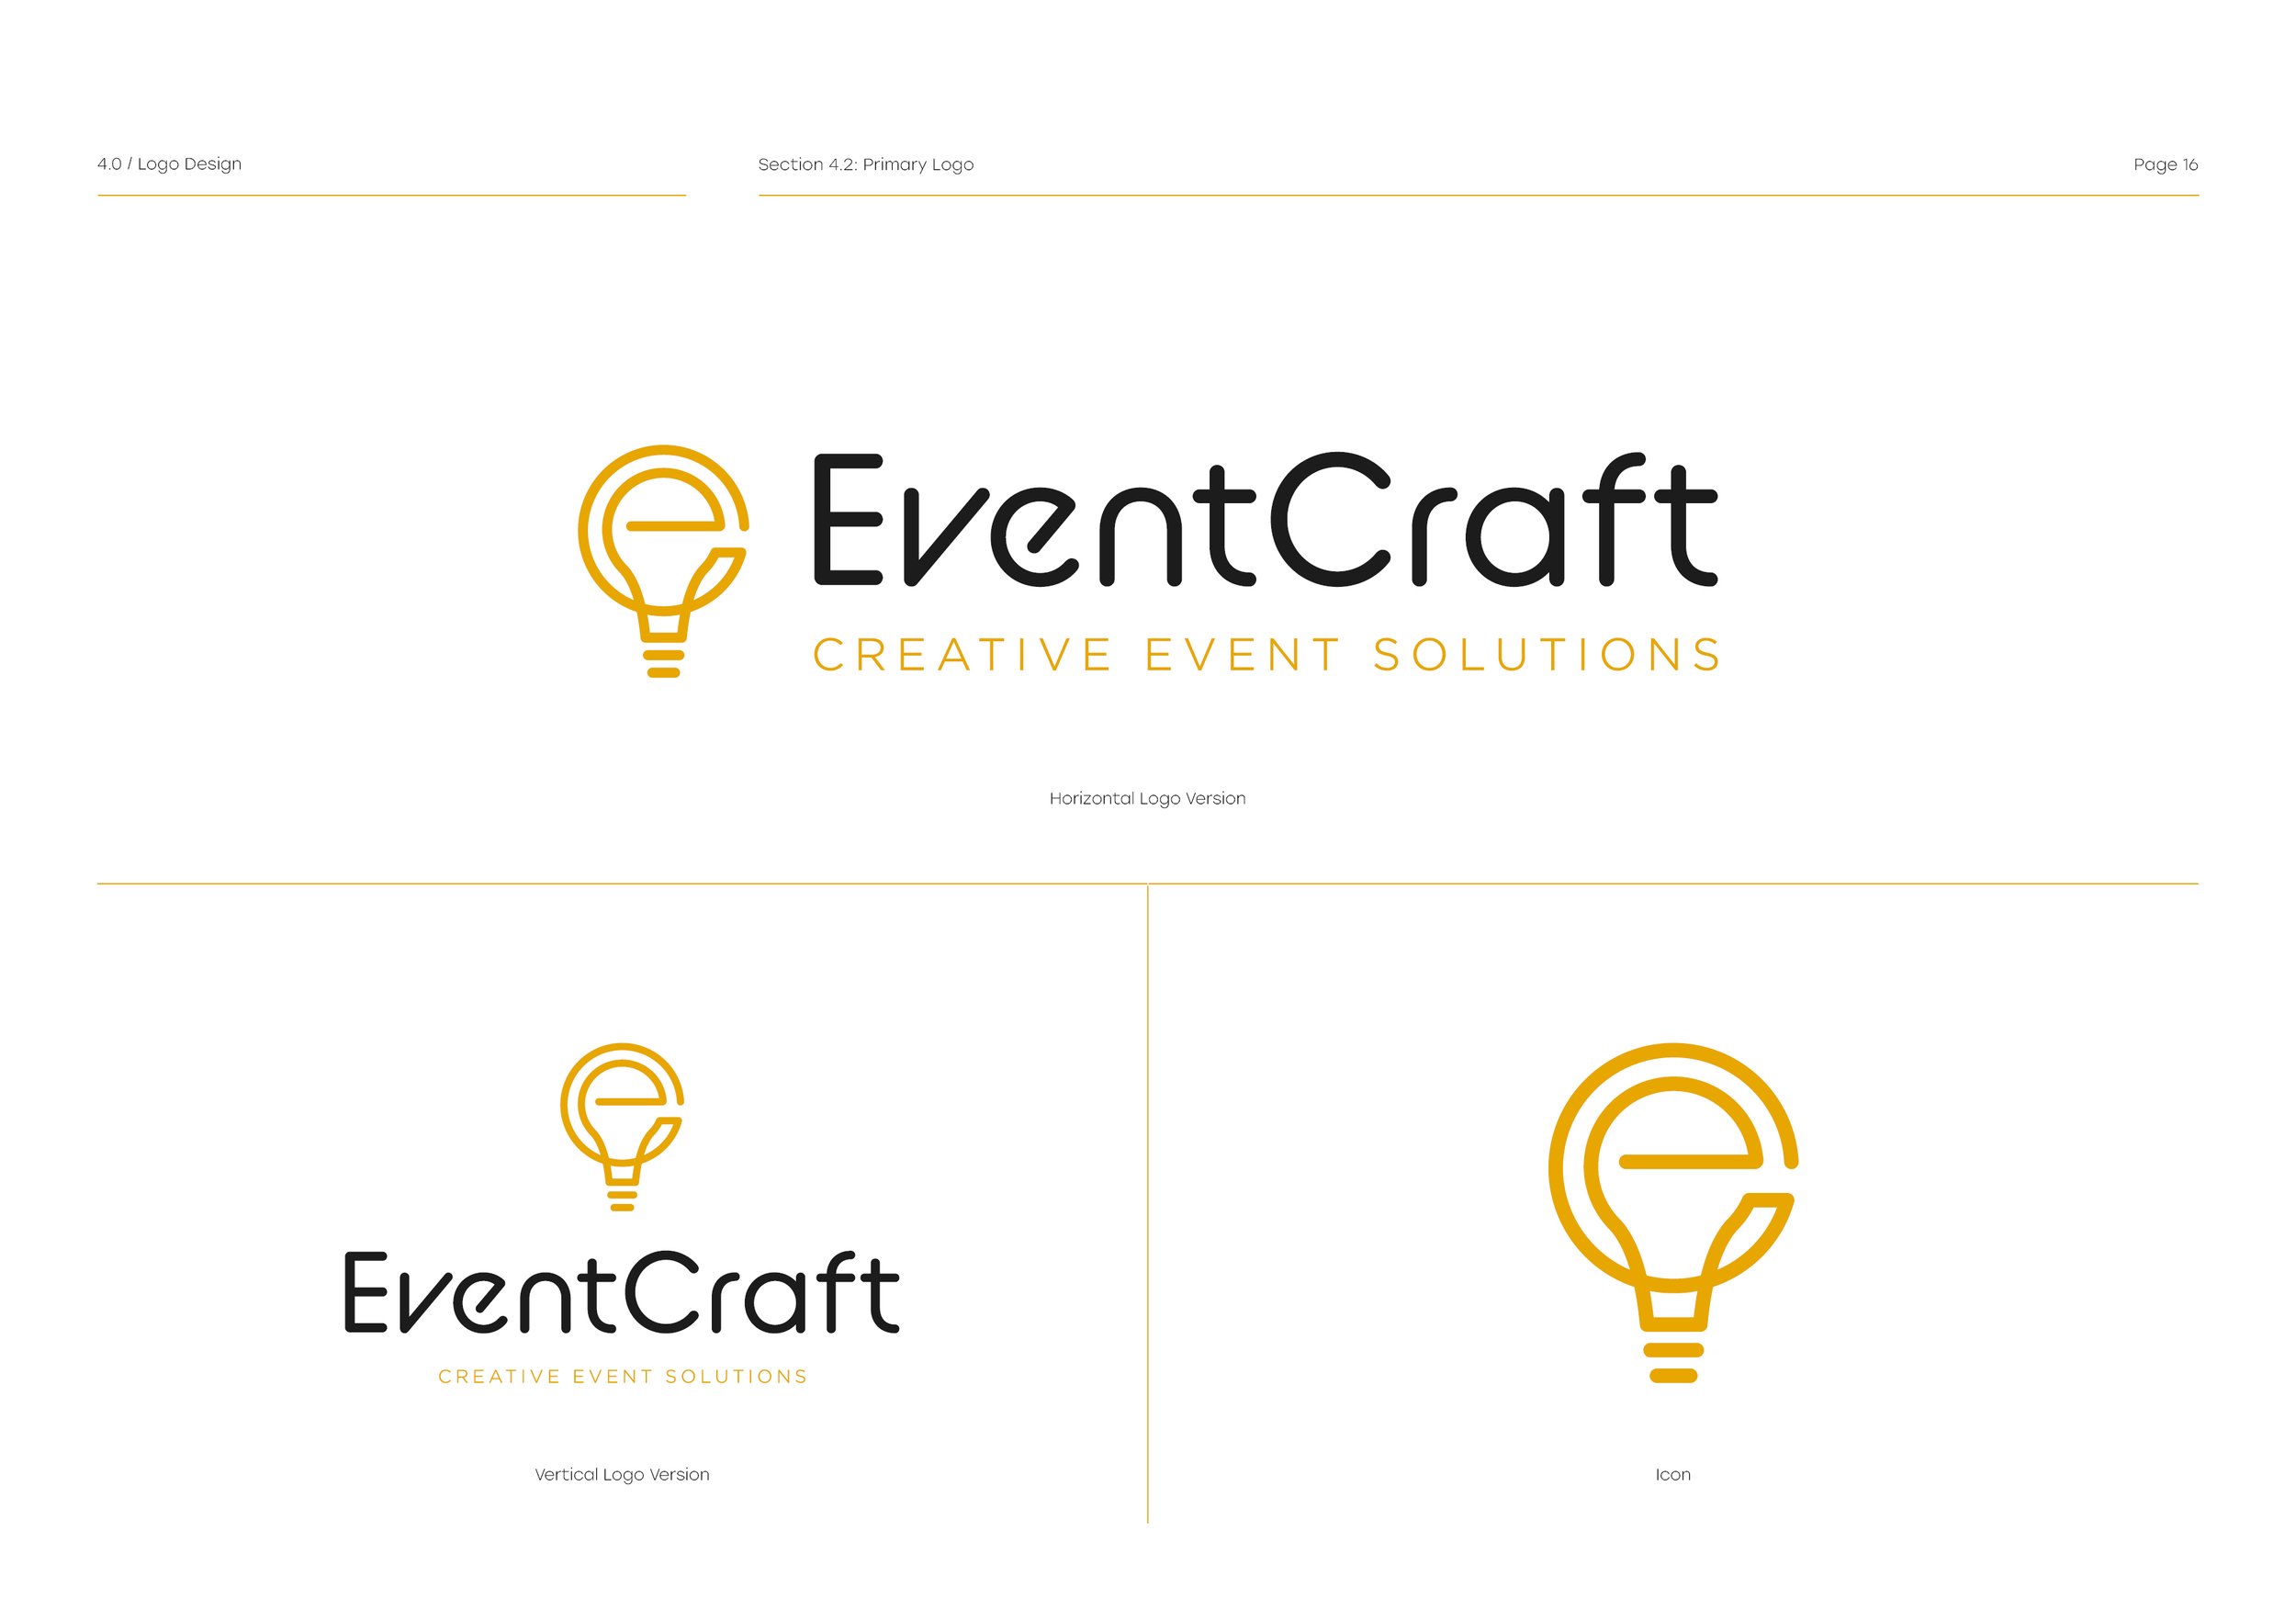 Event Craft - Brand Identity16.jpg